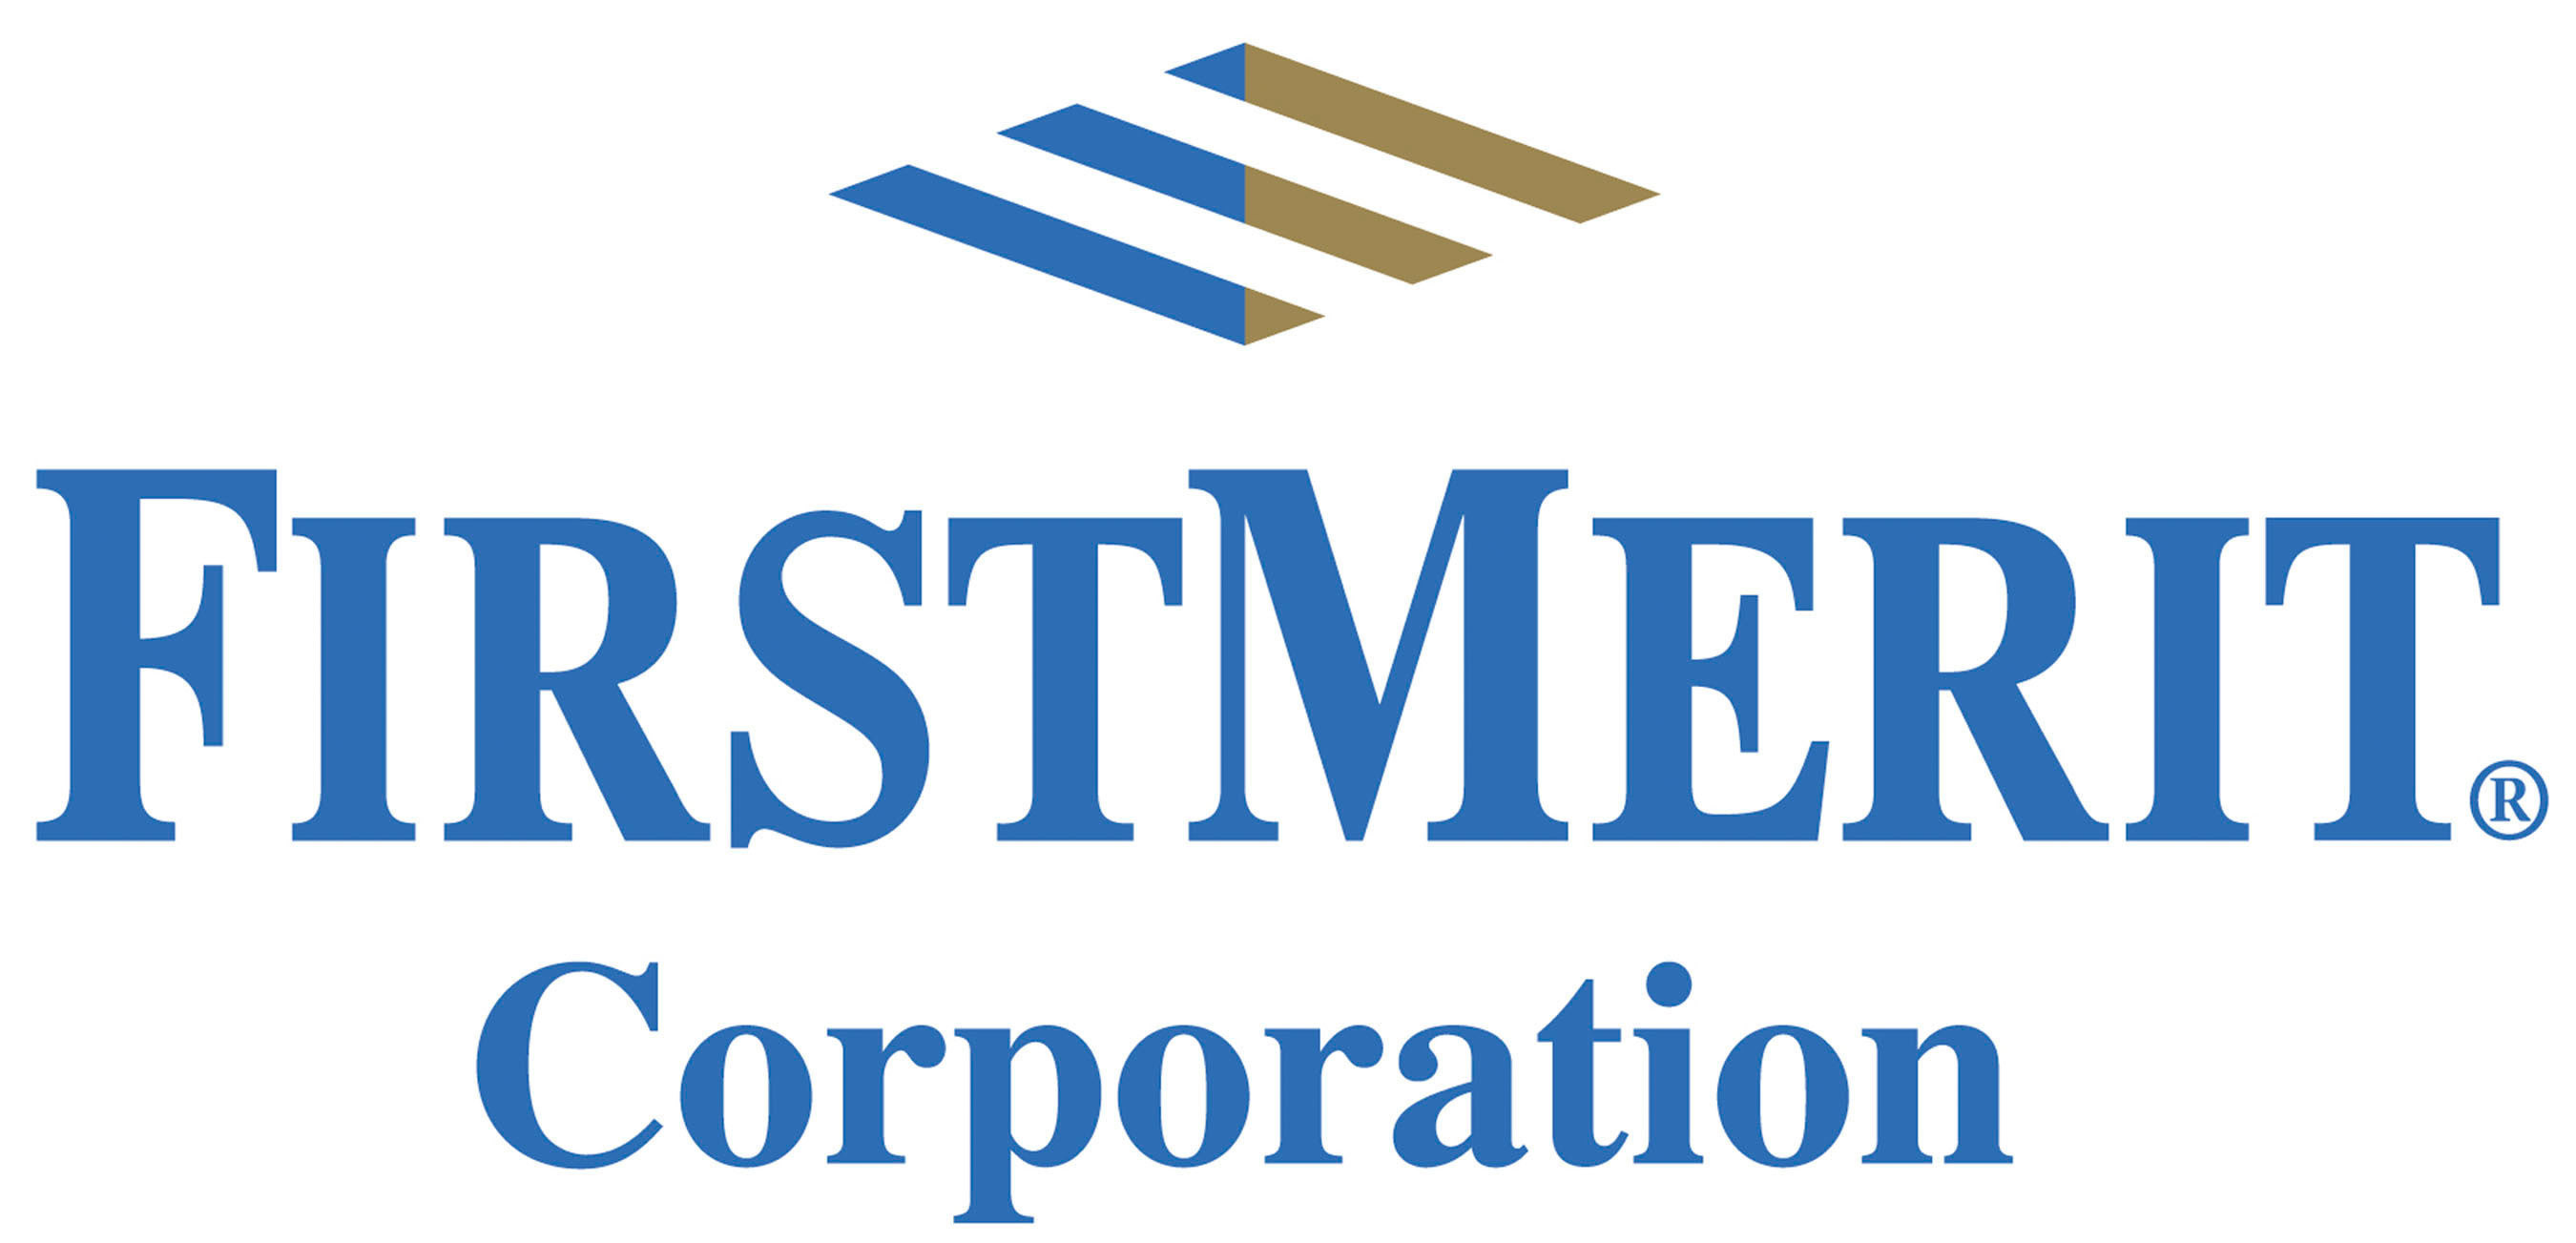 FirstMerit Corporation